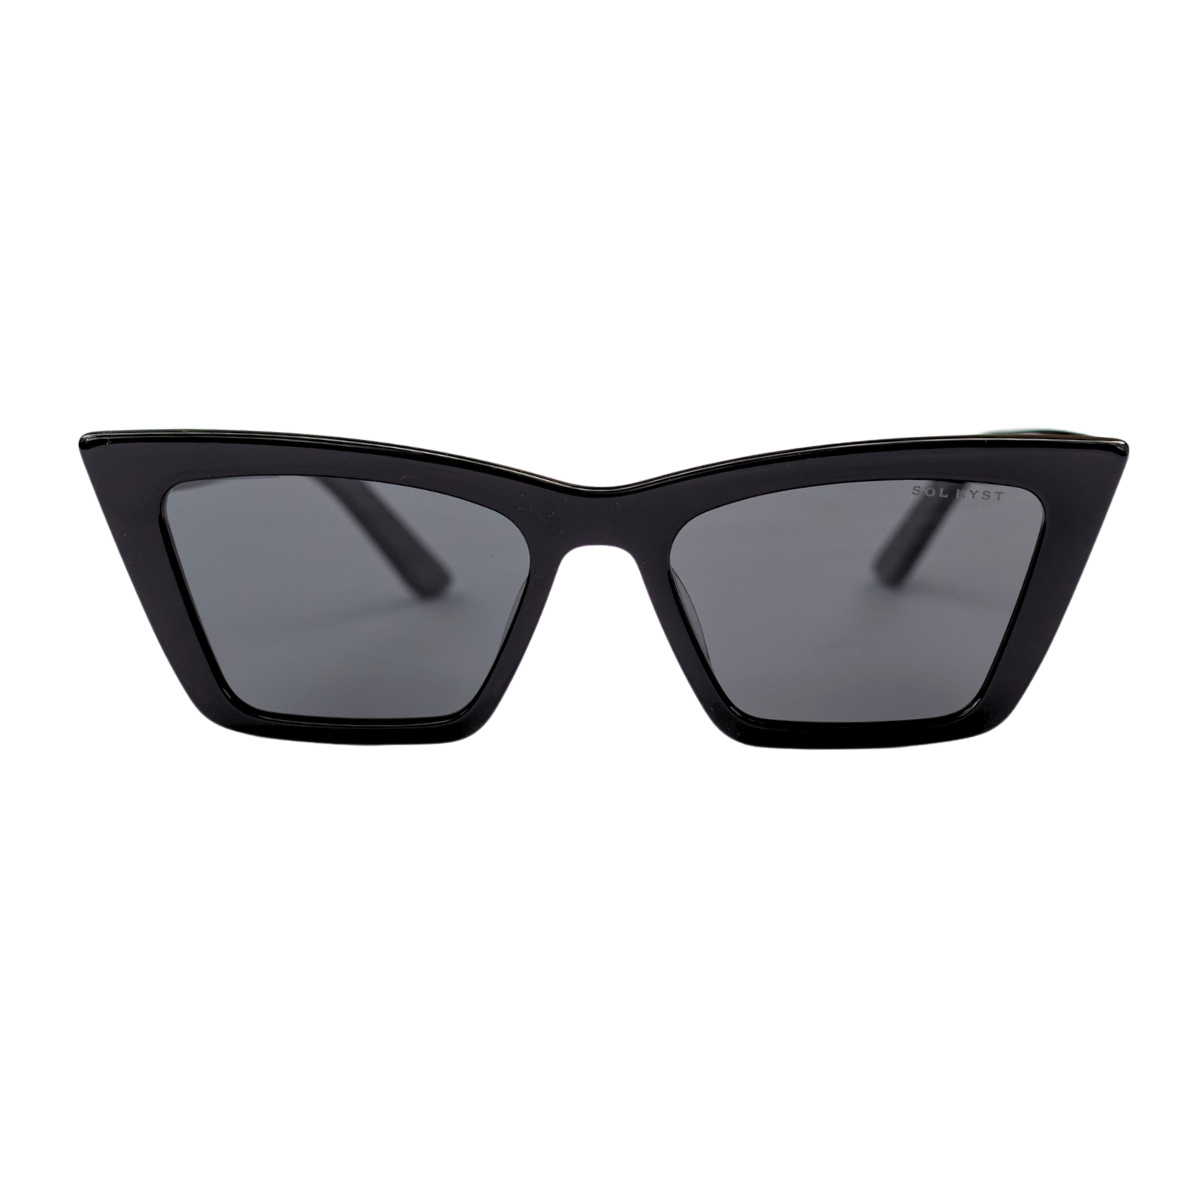 sunglasses, trapezoid silhouette, trap silhouette, black frame, midi size, wide face petite, slightly wider than standard